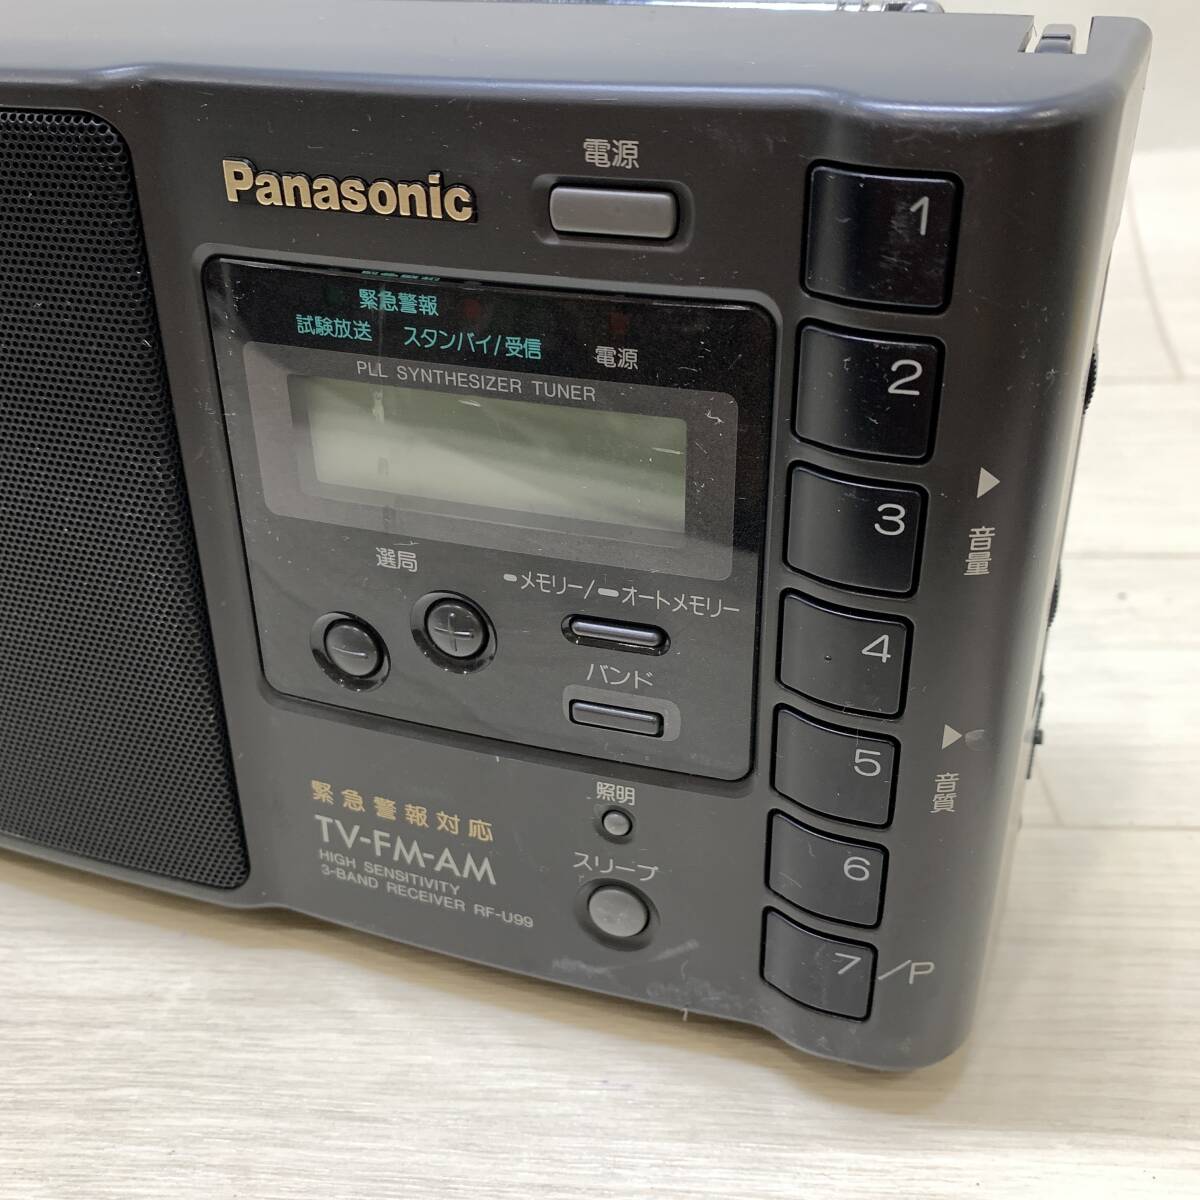 #Panasonic RF-U99 Panasonic urgent alarm broadcast TV-FM-AM 3 band receiver made in Japan ( black ) one part operation verification #R41759